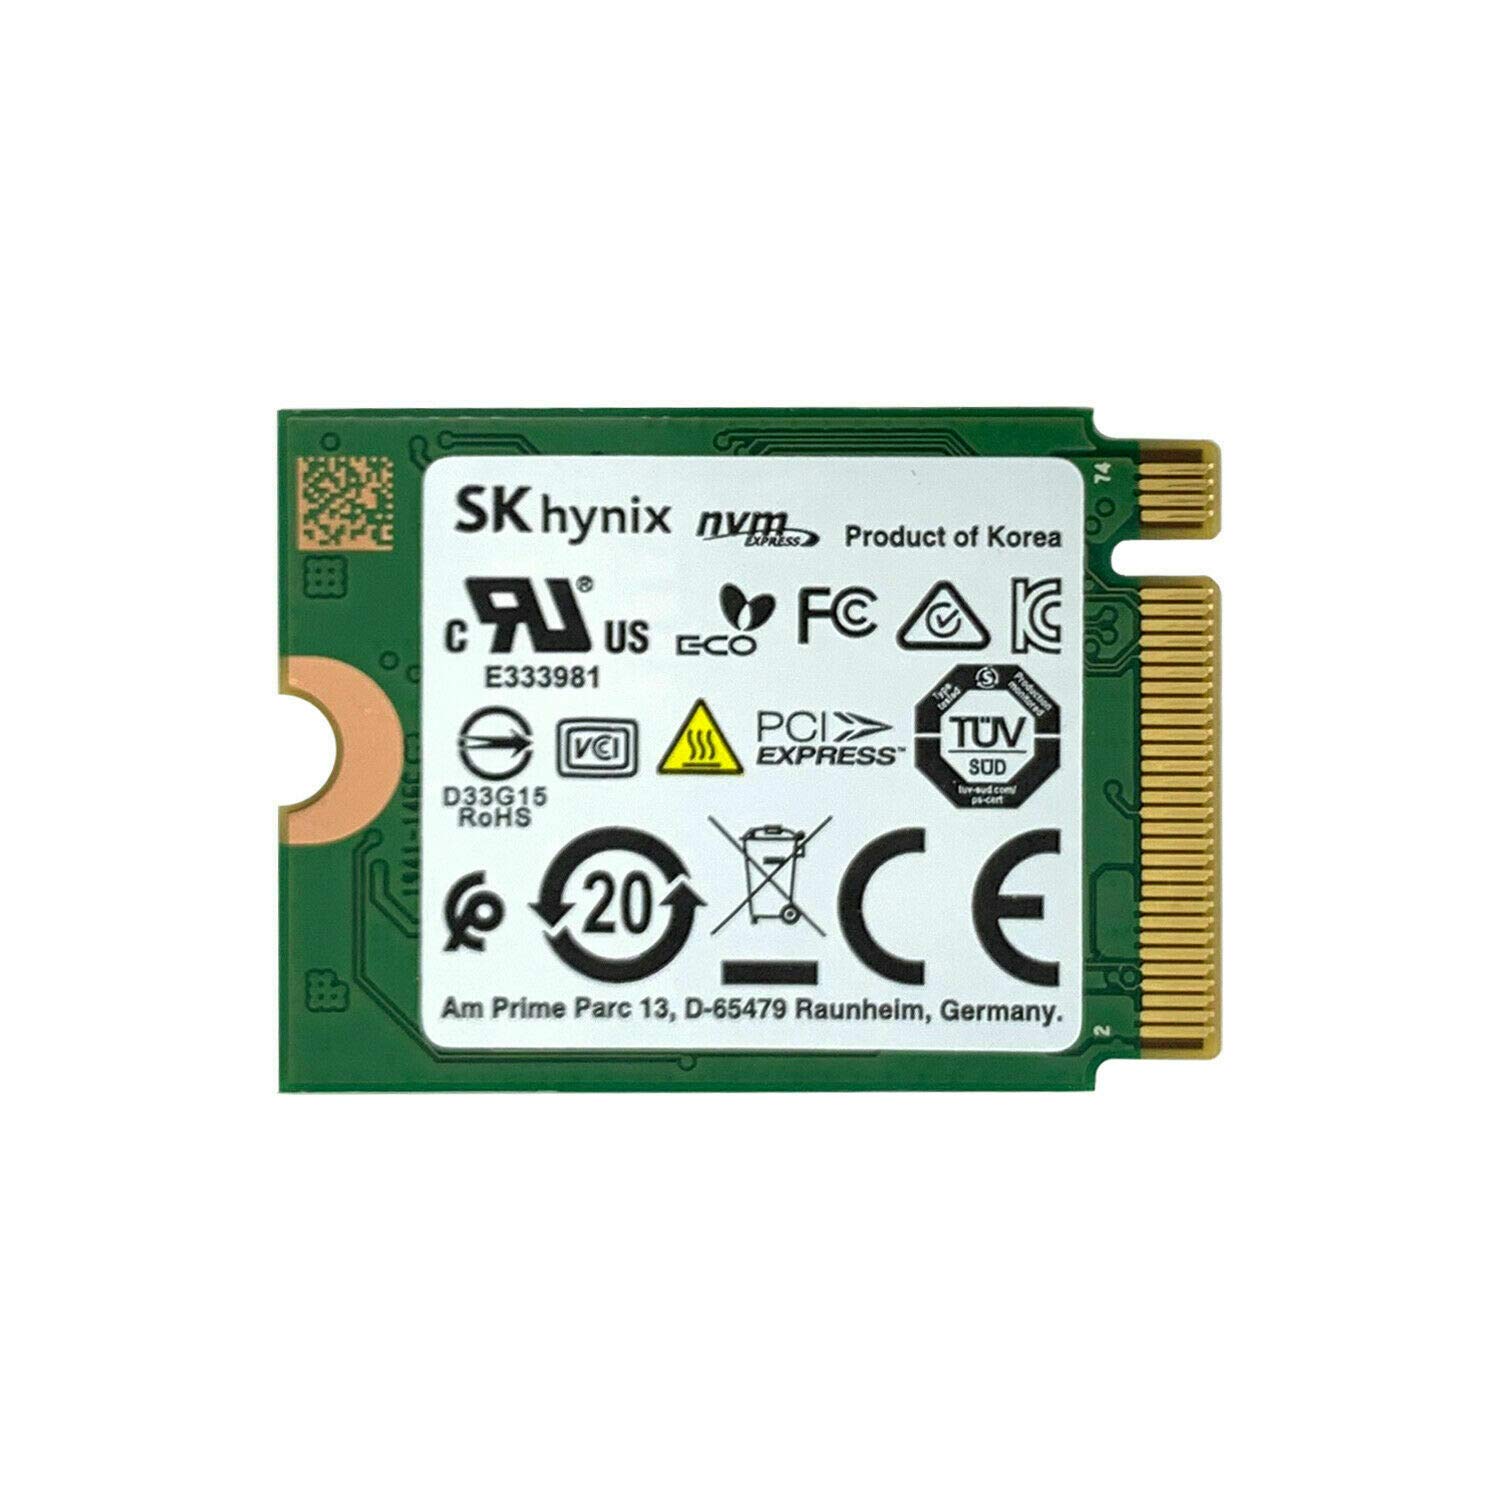 66 SkHynix 256GB PCIe NVMe 2230 SSD (HFM256GDGTINI) (OEM)